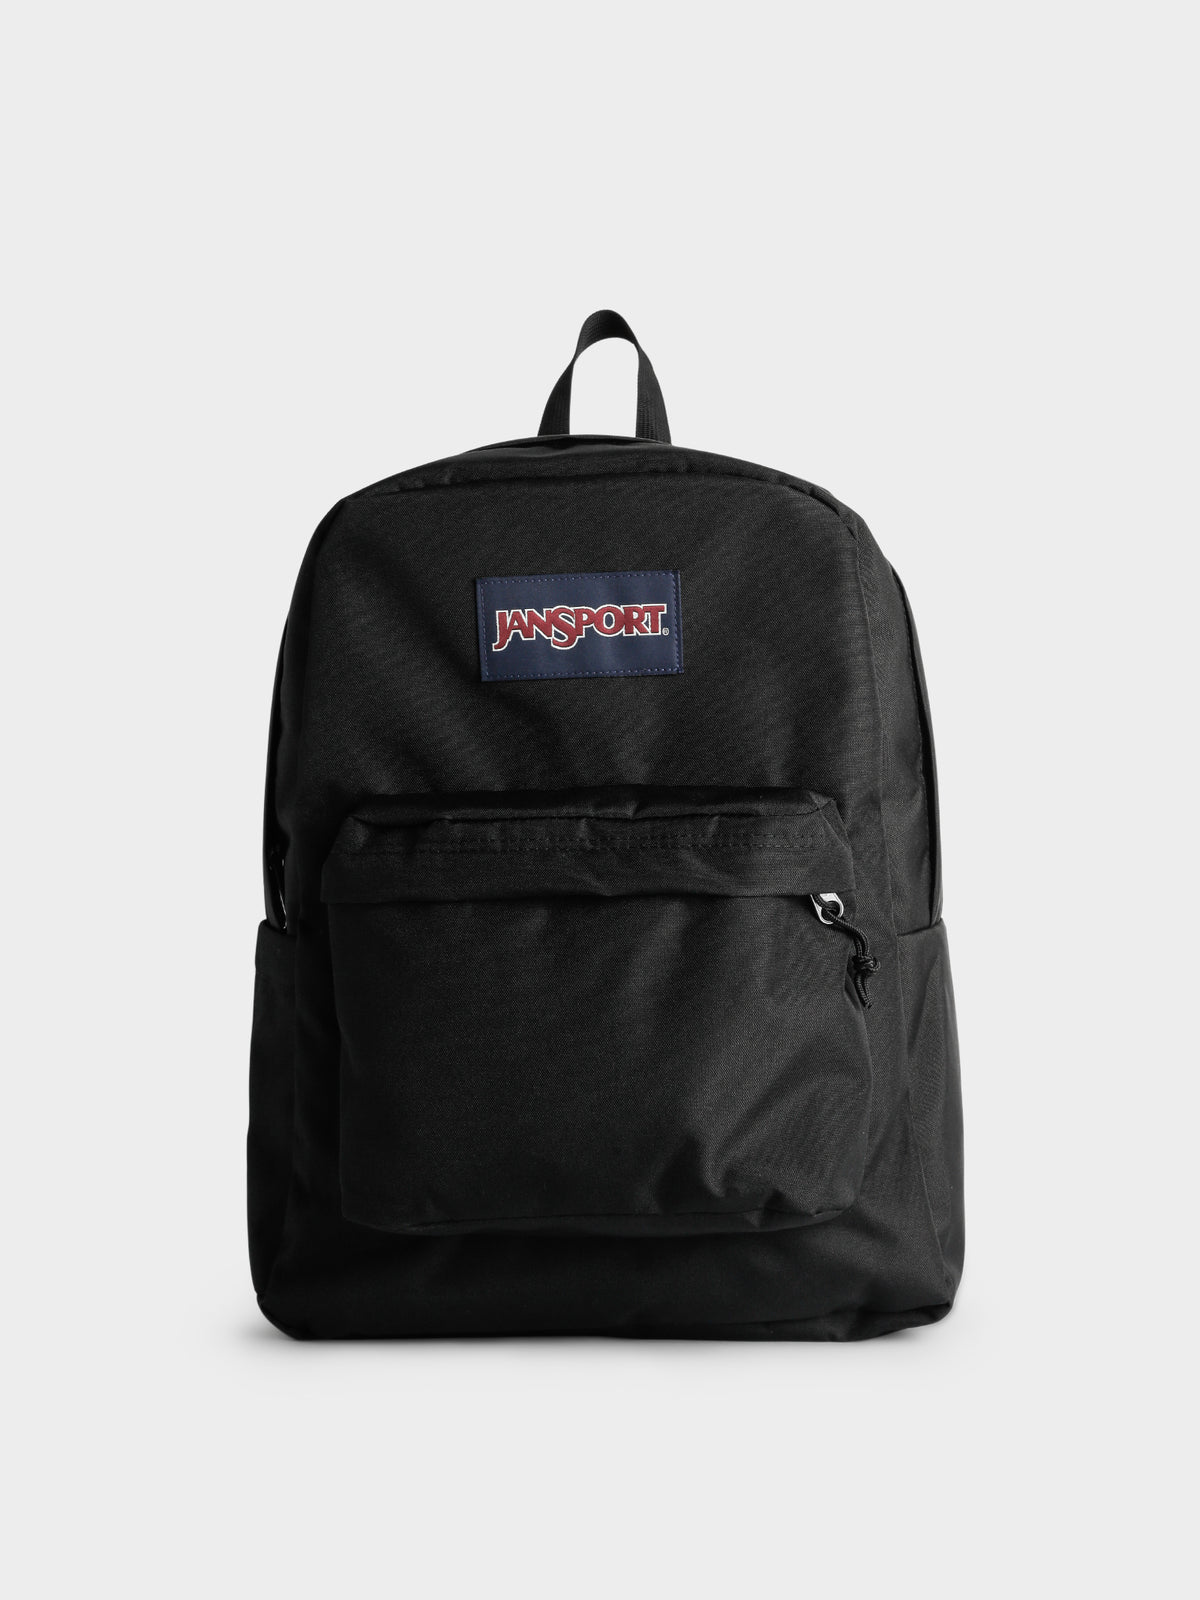 Superbreak Backpack in Black